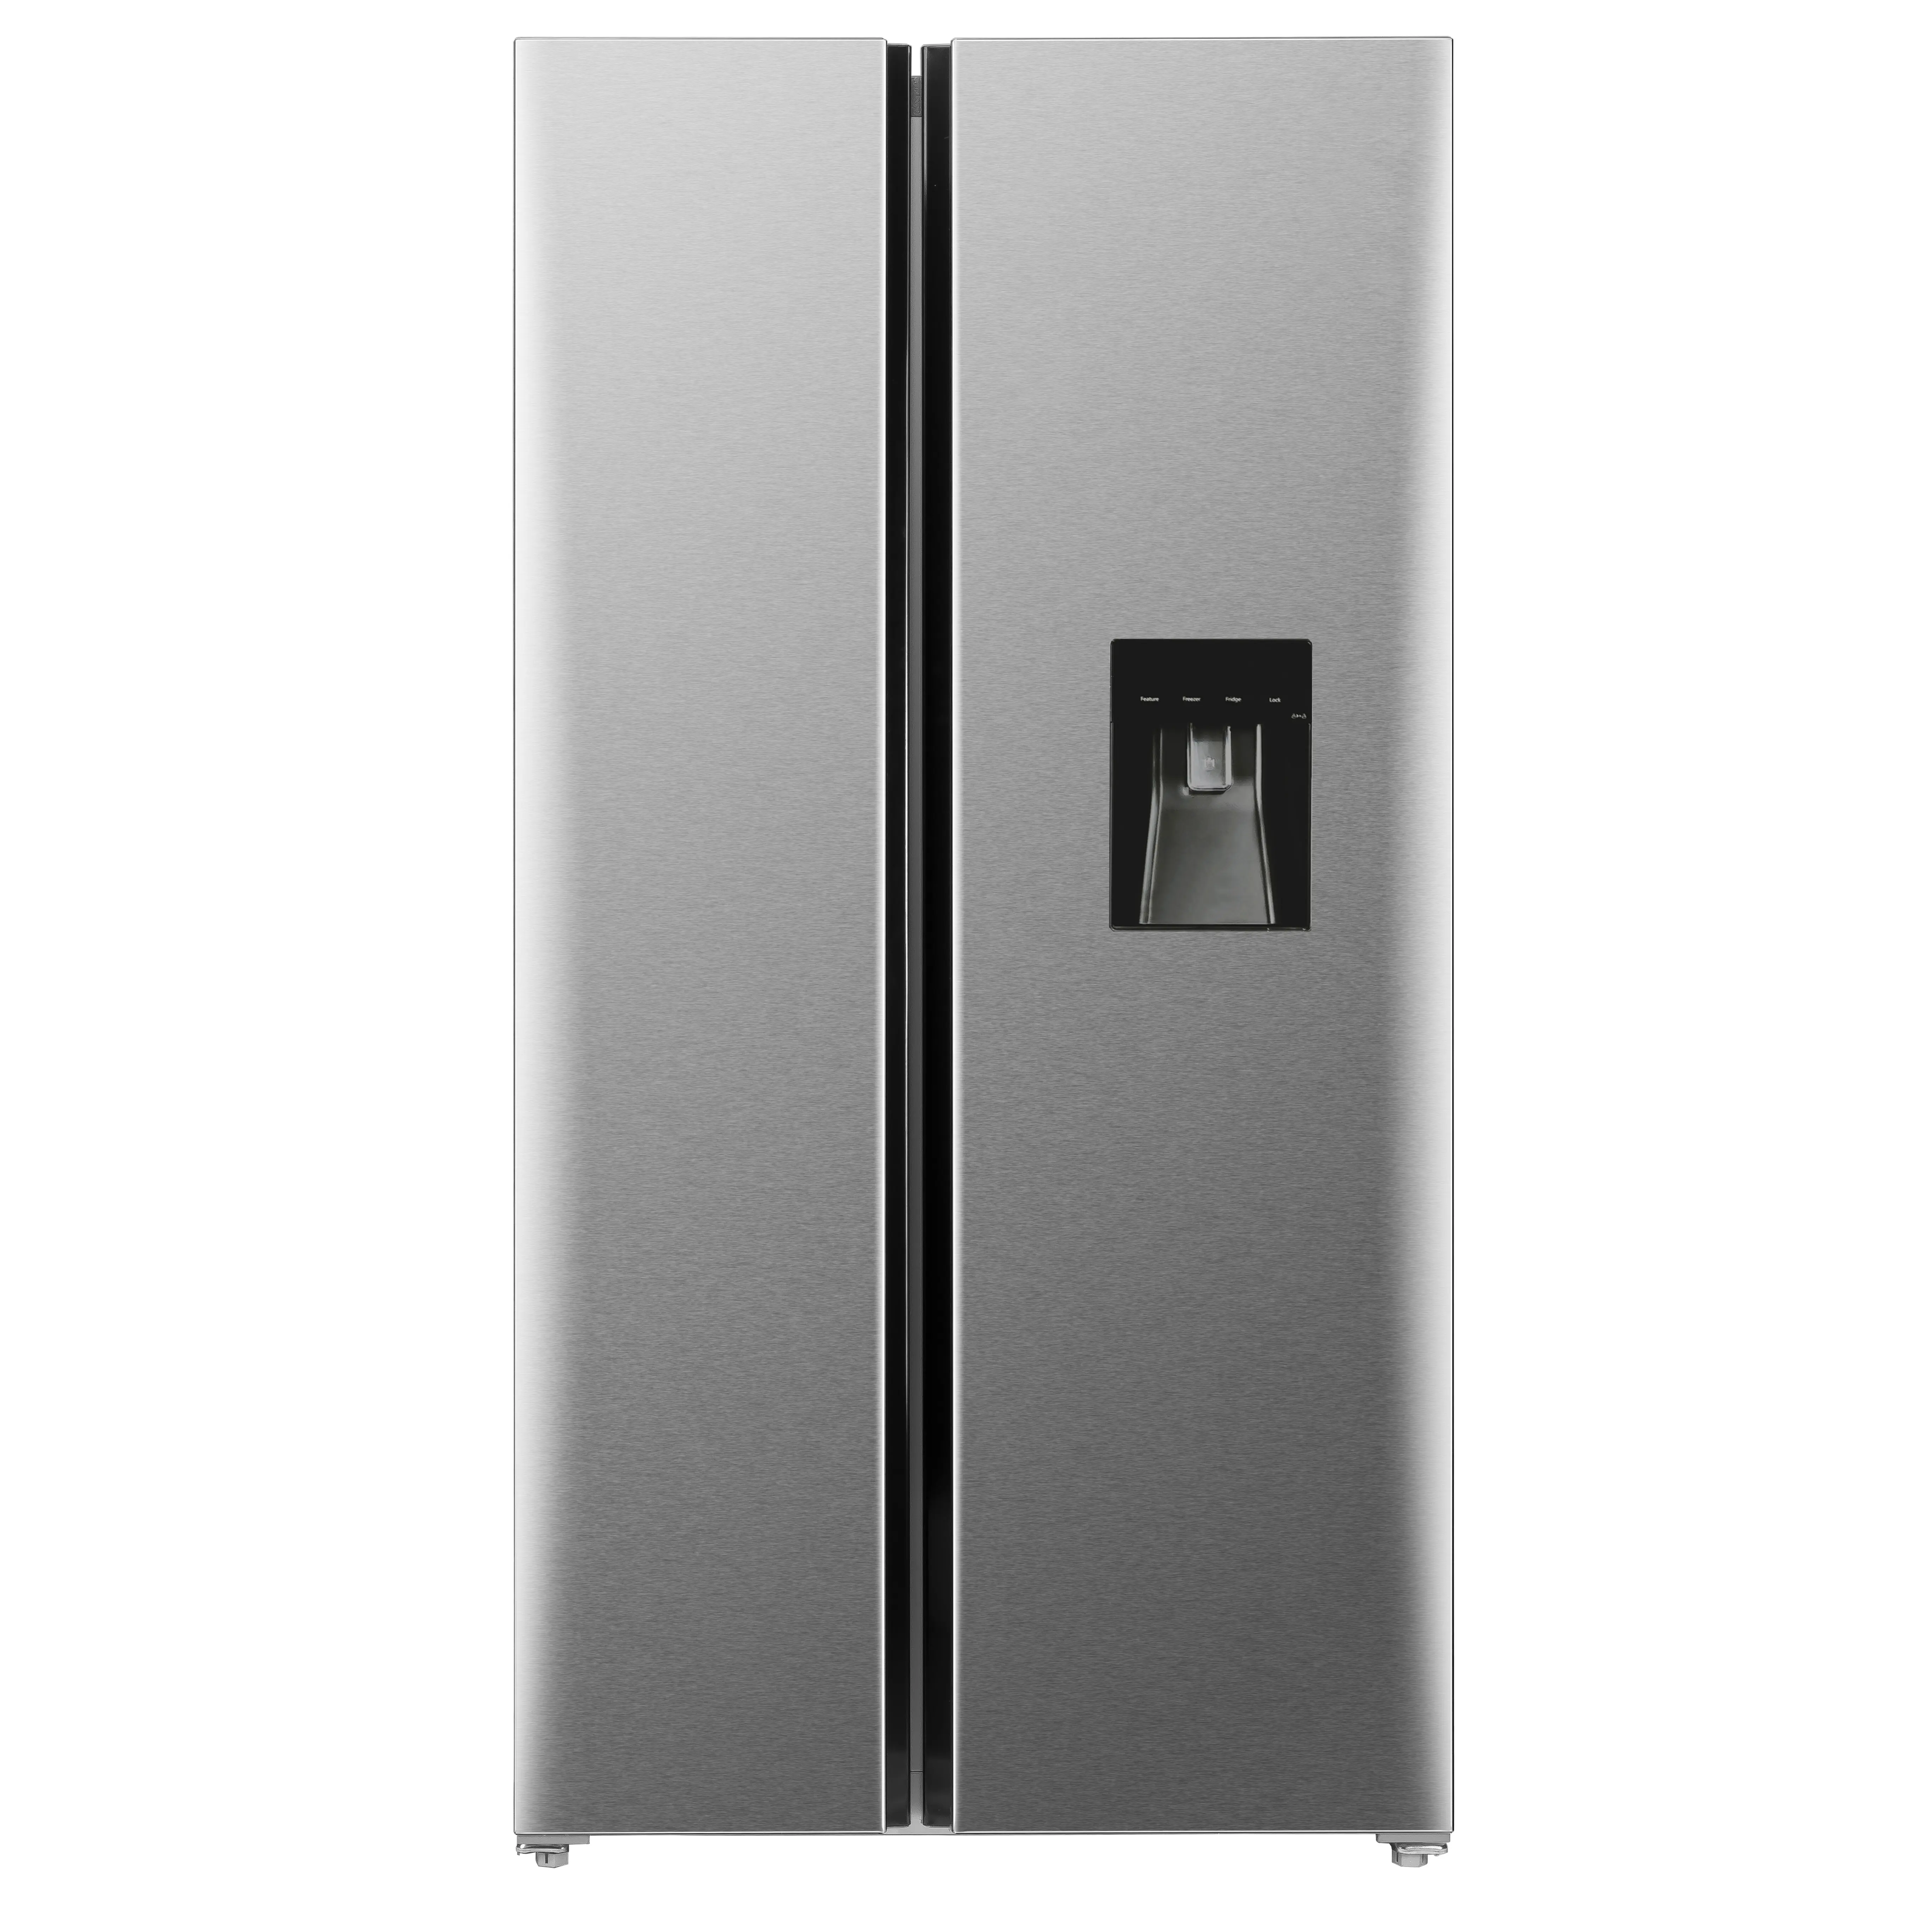 Refrigerador lateral con dispensador de agua para el hogar, inversor de BCD-518WD de nevera americano de alta calidad